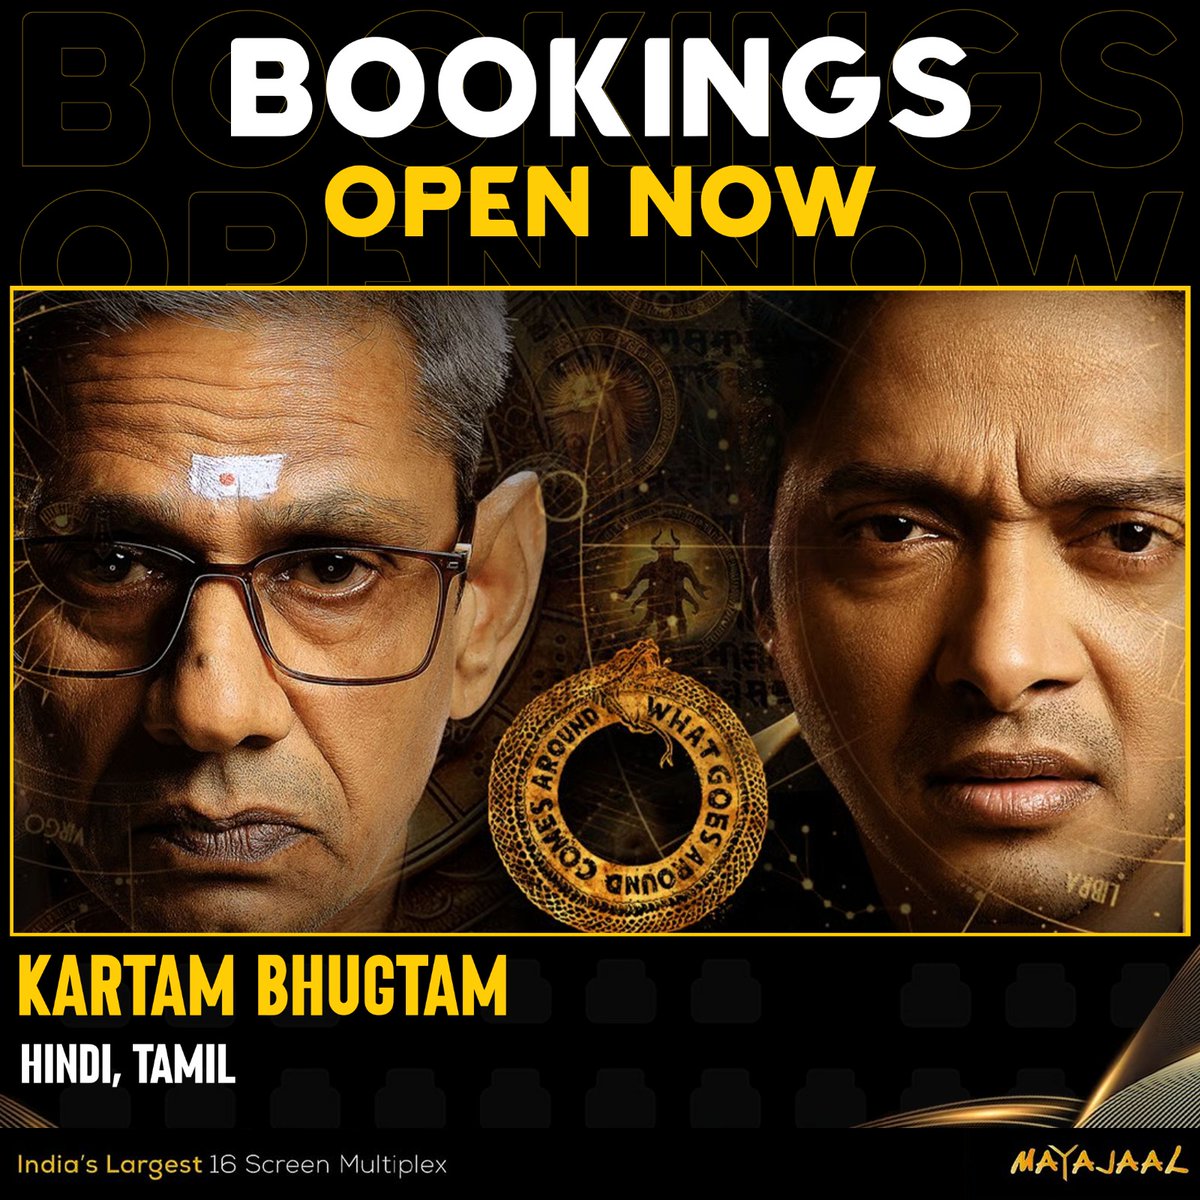 Get ready to believe in the power of karma with #KartamBhugtam ! Bookings open for #KartamBhugtam (Hindi & Tamil) at #Mayajaal 🎟️bit.ly/3sVdbqD #ShreyasTalpade #MadhooShah #SohamShah